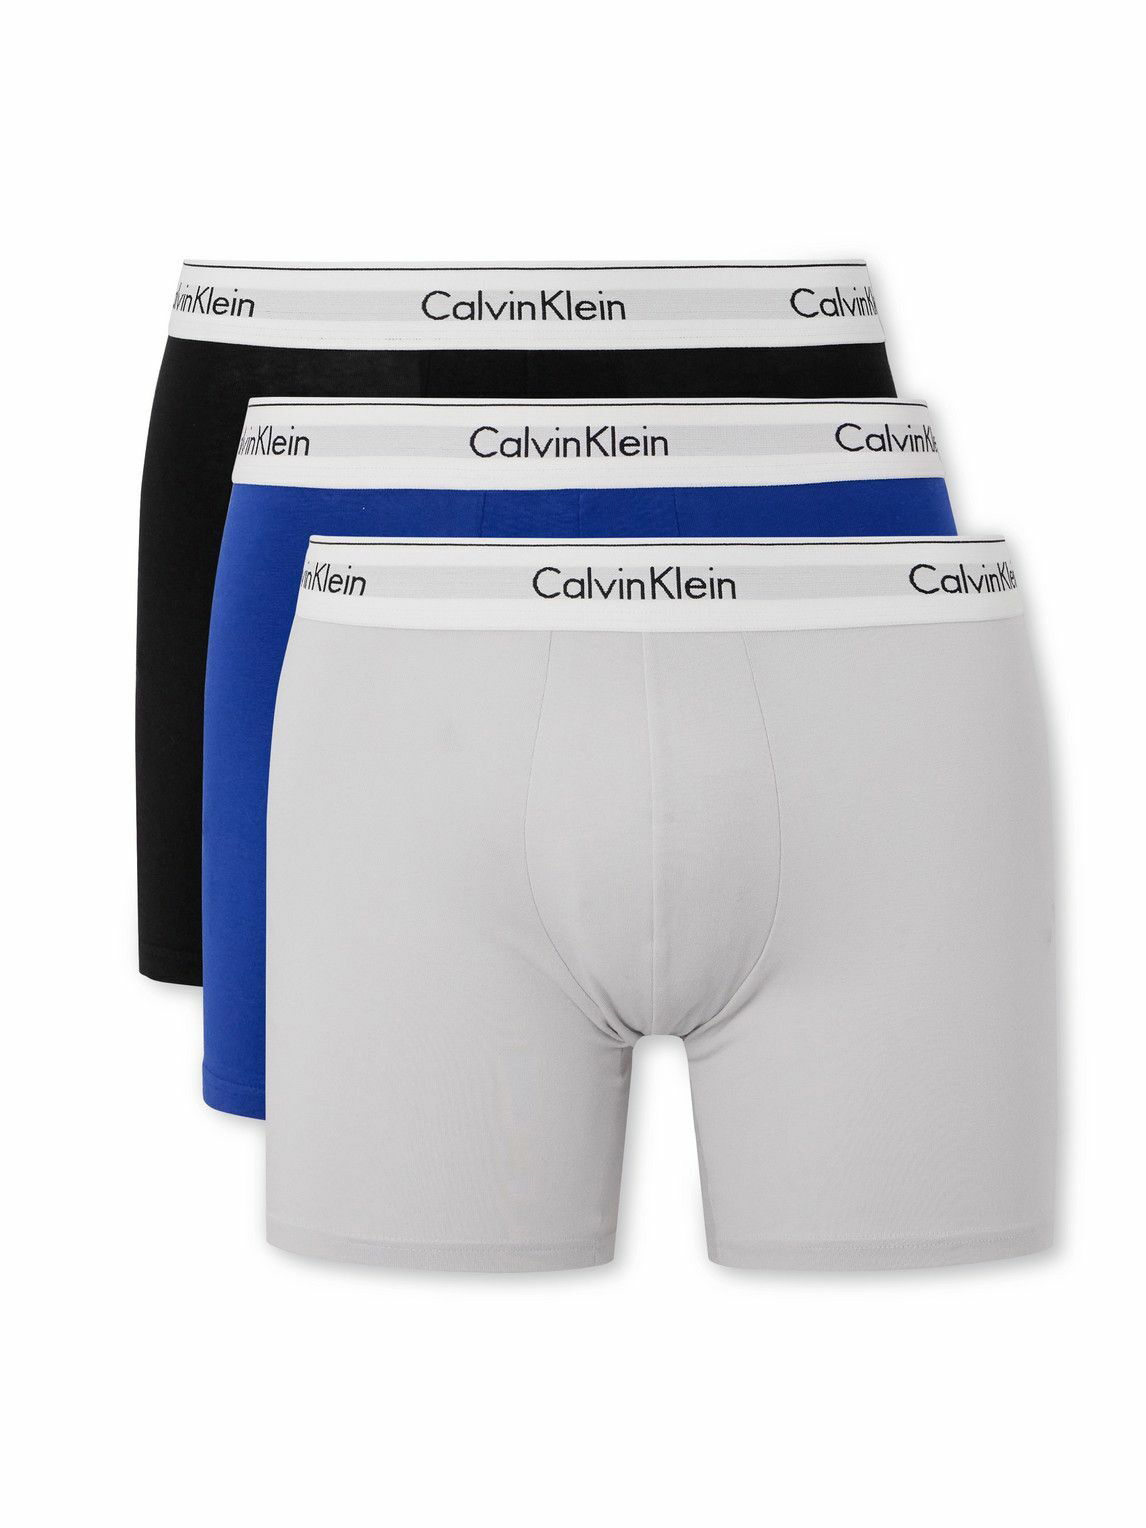 2-Pack Calvin Klein Cotton Stretch Jockstrap - Jockstrap - Trunks